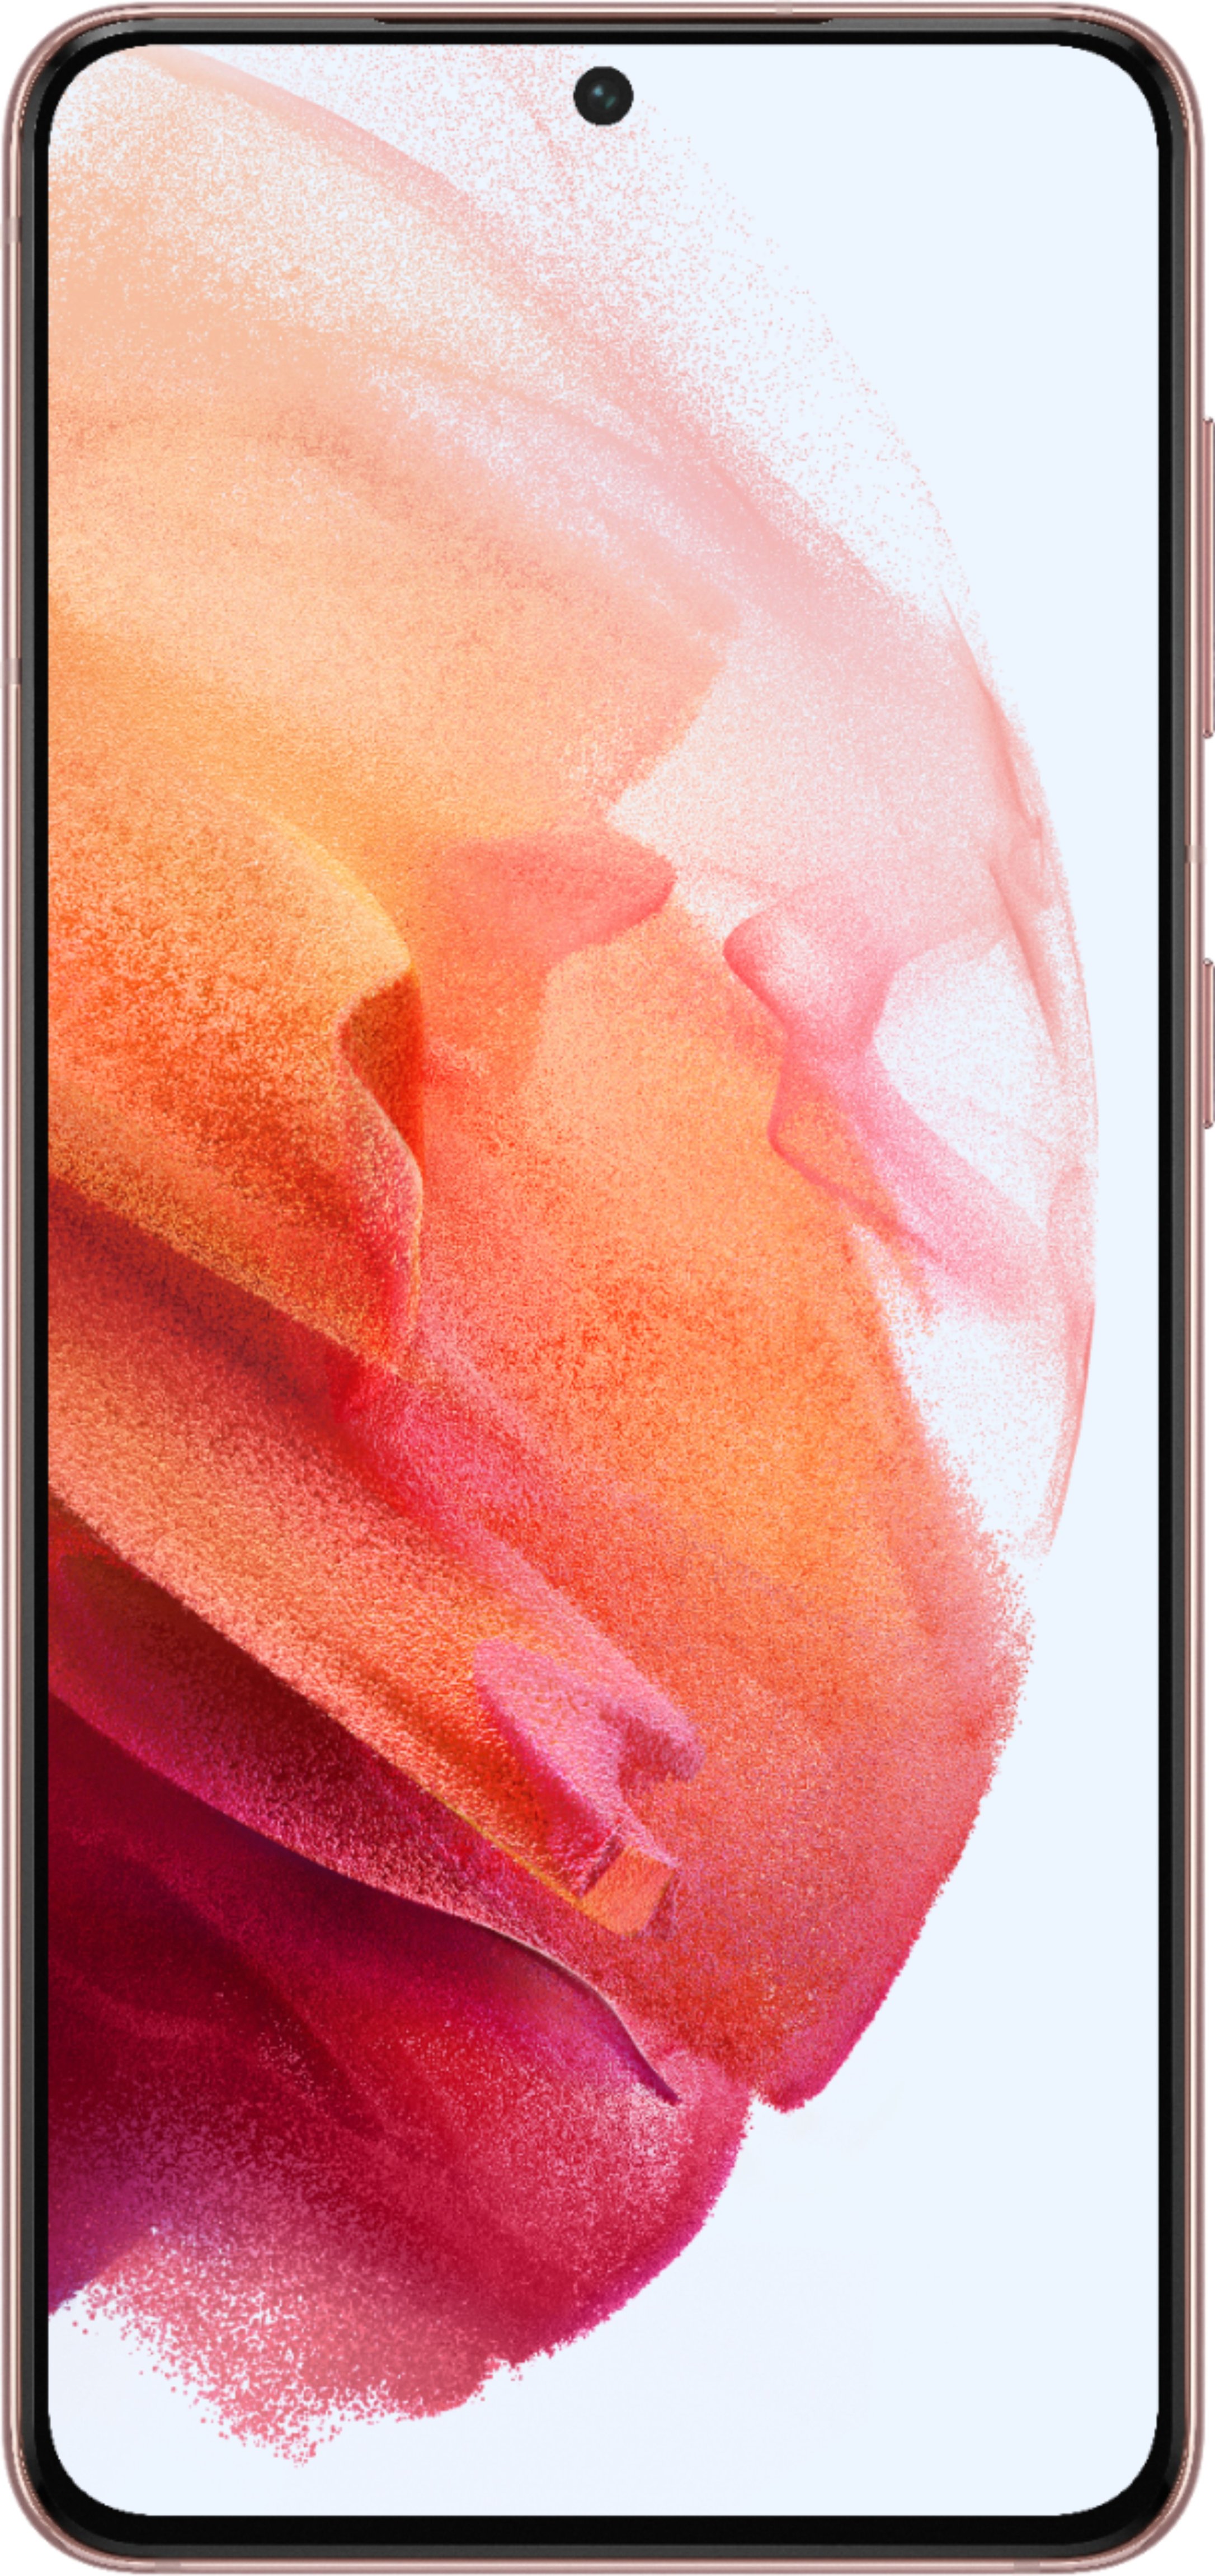 Samsung Galaxy S21 5G G991B 256GB Dual Sim GSM Unlocked Android Smartphone (International Variant/US Compatible LTE) - Phantom Pink - image 4 of 9